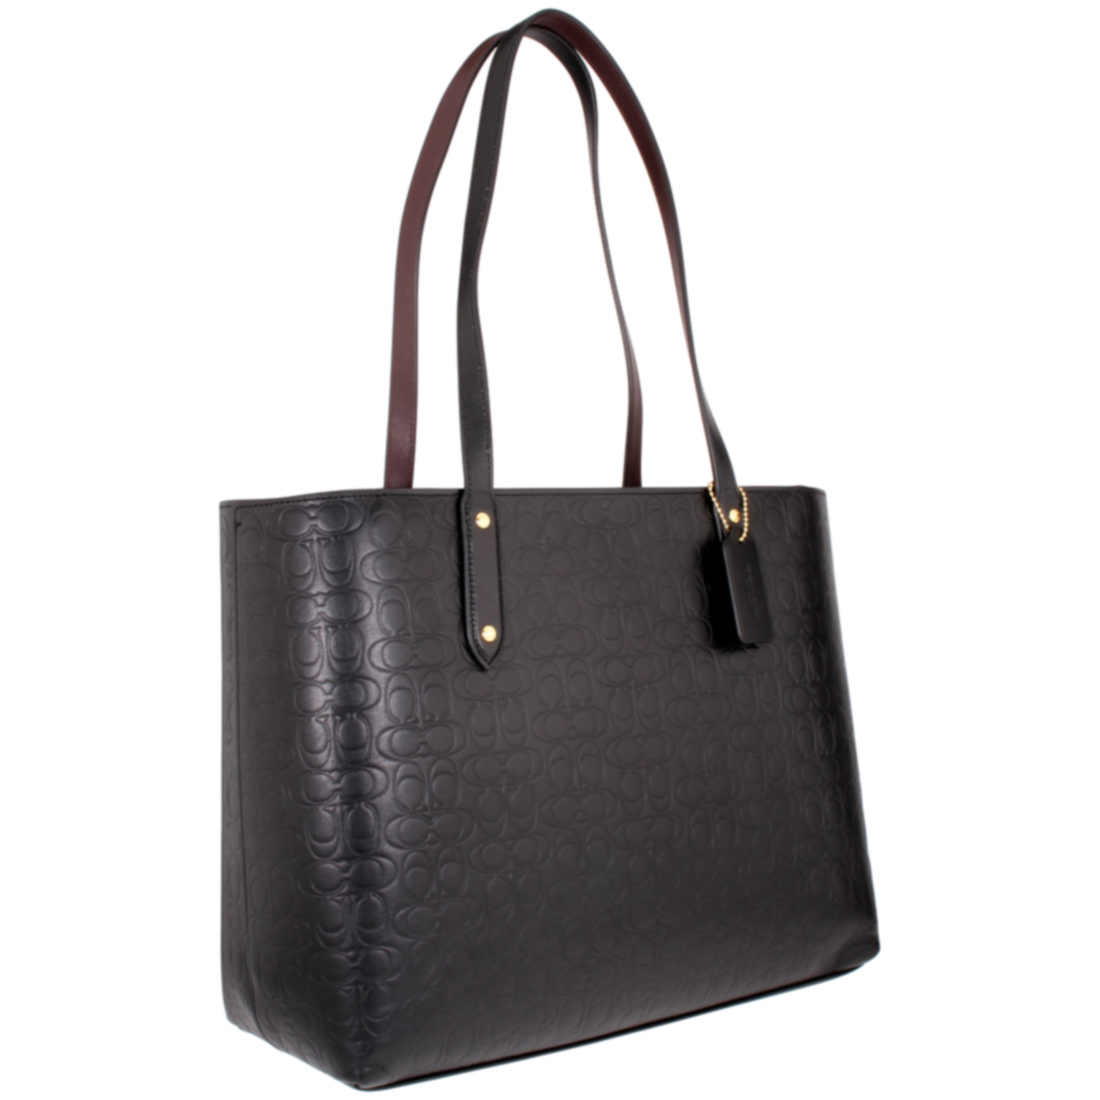 Coach Central Ladies Large Black Leather Tote Bag 69652IGDBLK | eBay